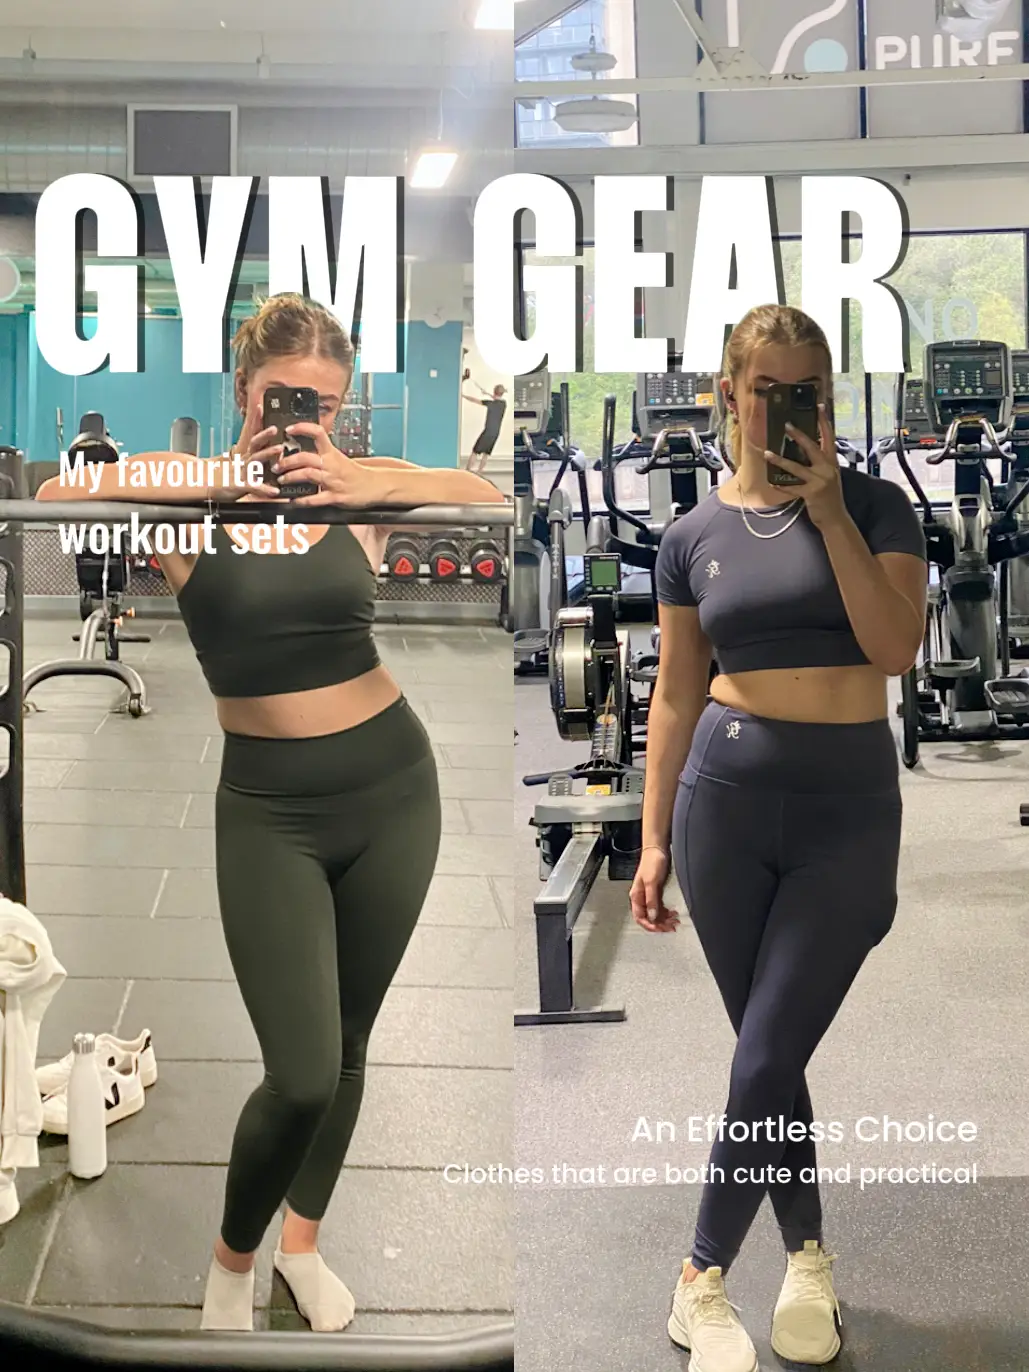 AYBL camo gym set sports bra + leggings both size - Depop